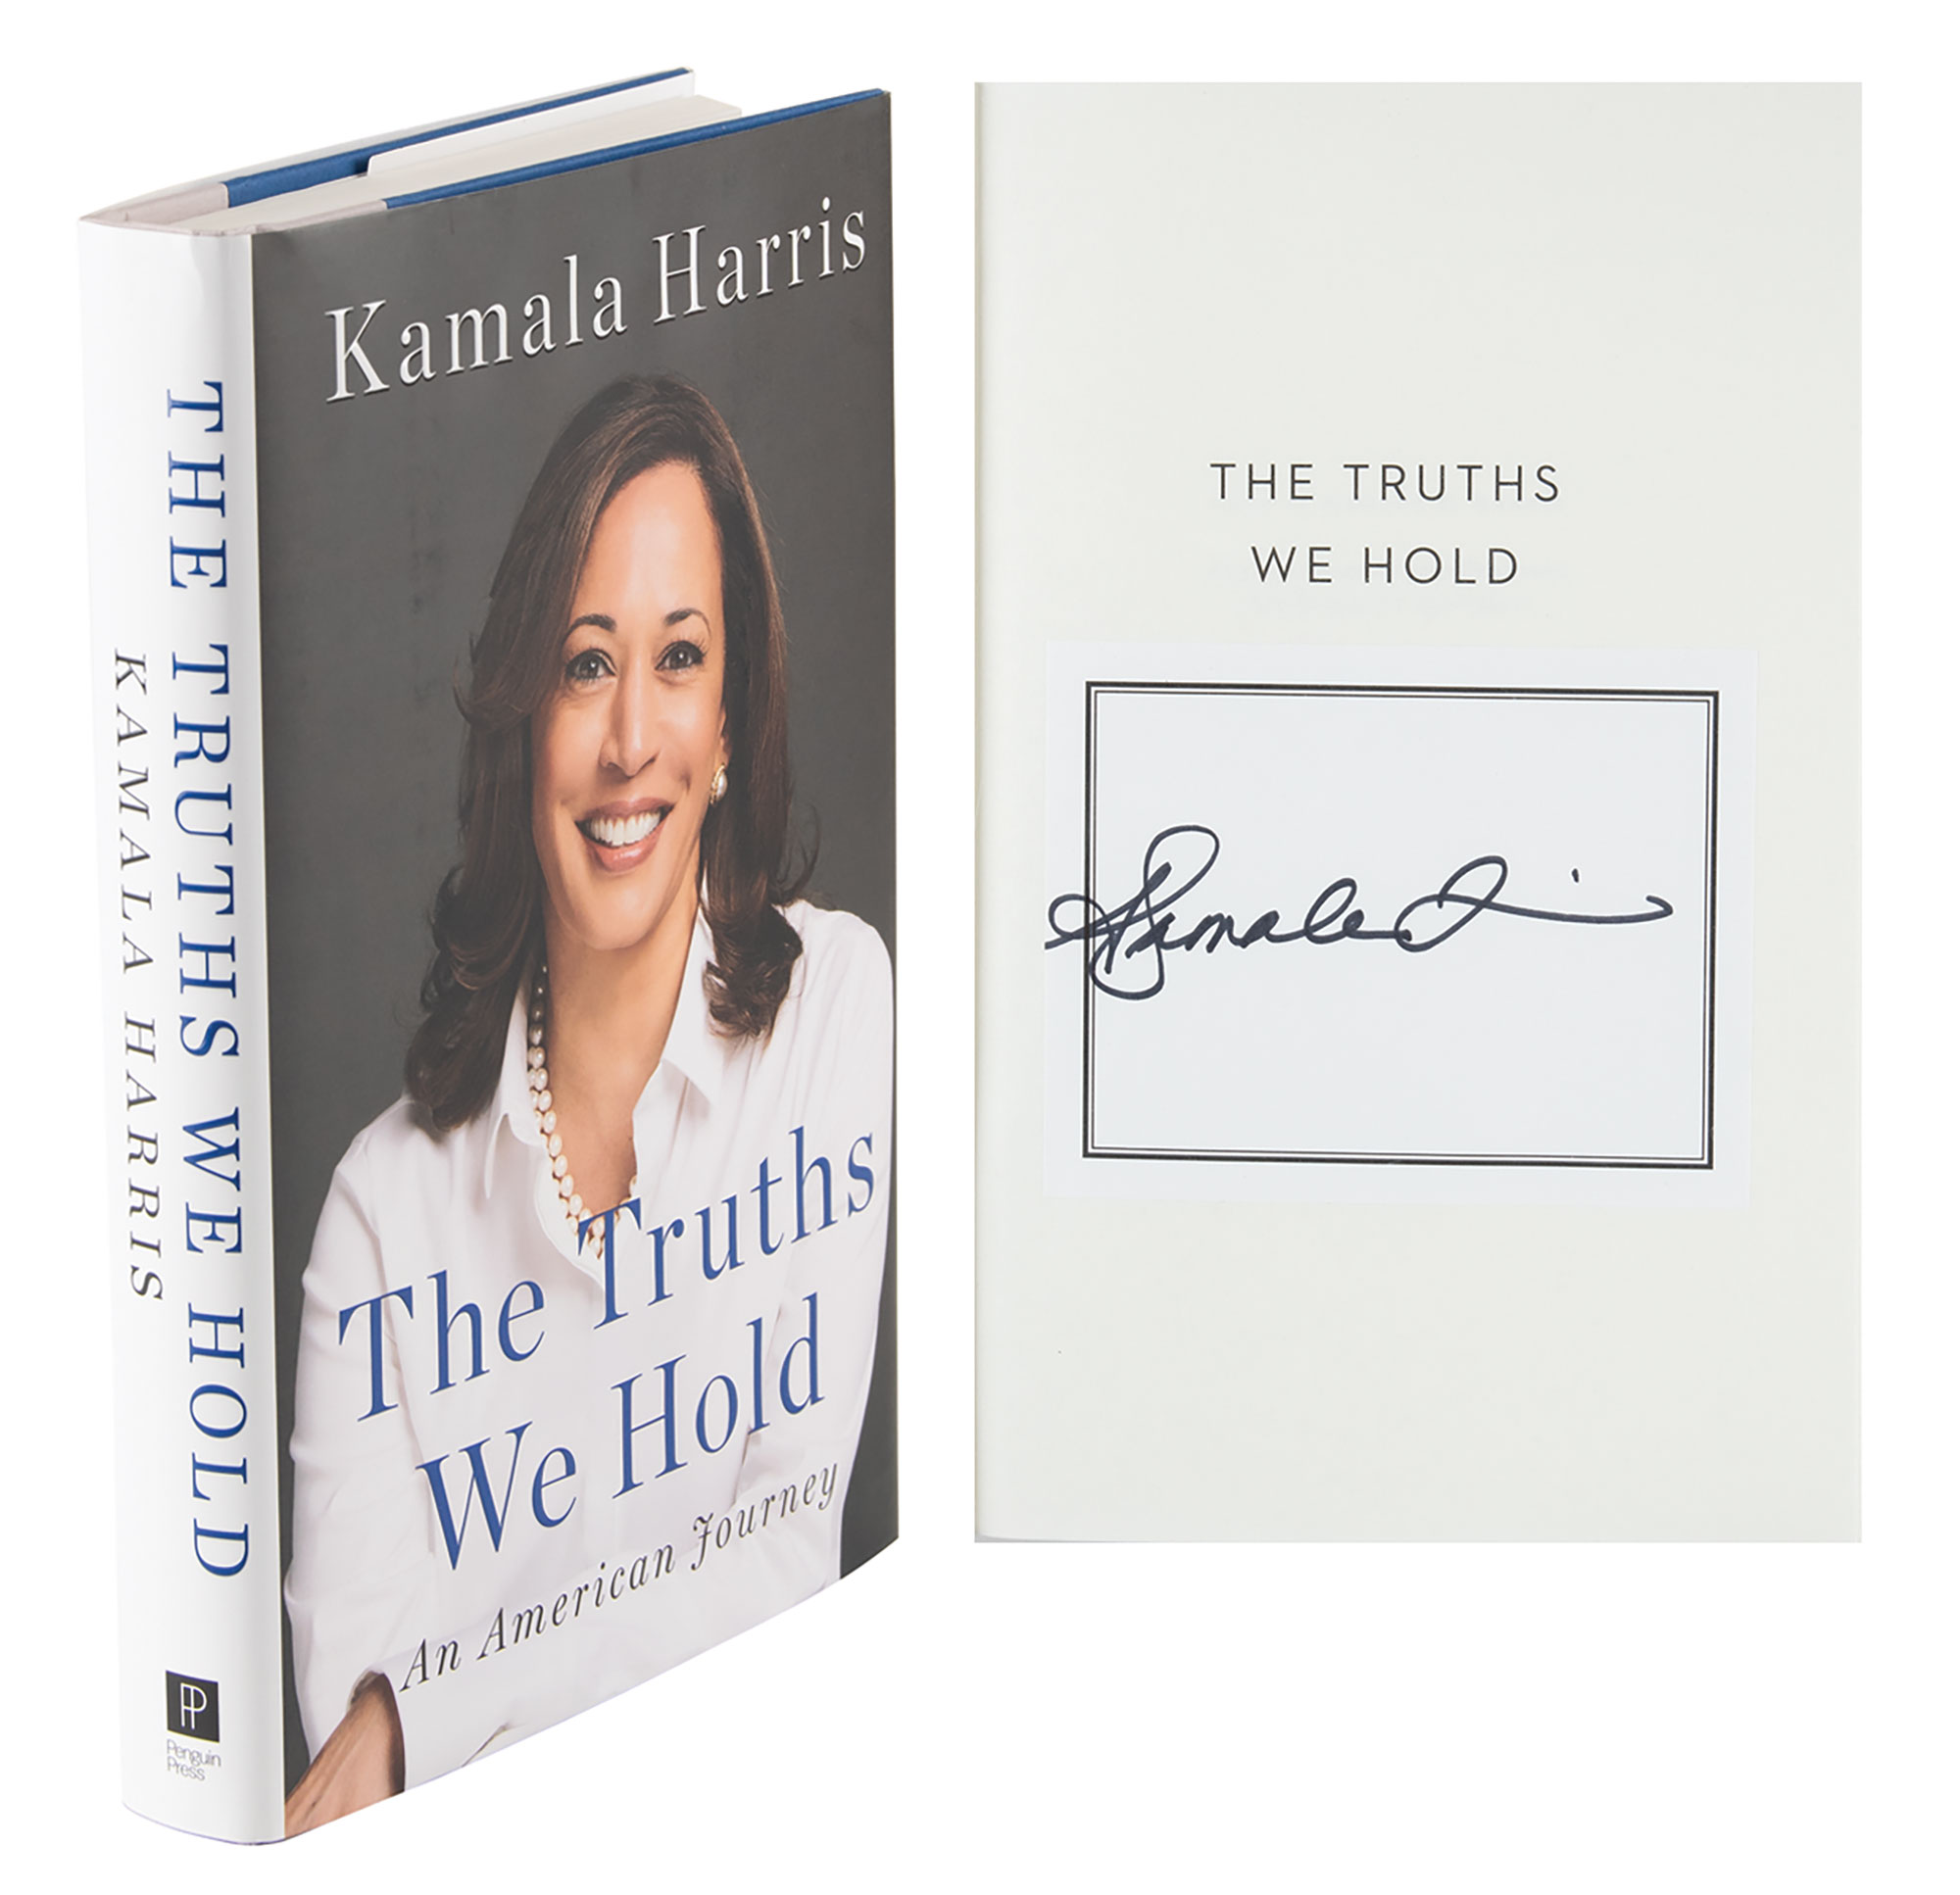 Lot #280 Kamala Harris Signed Book - Image 1